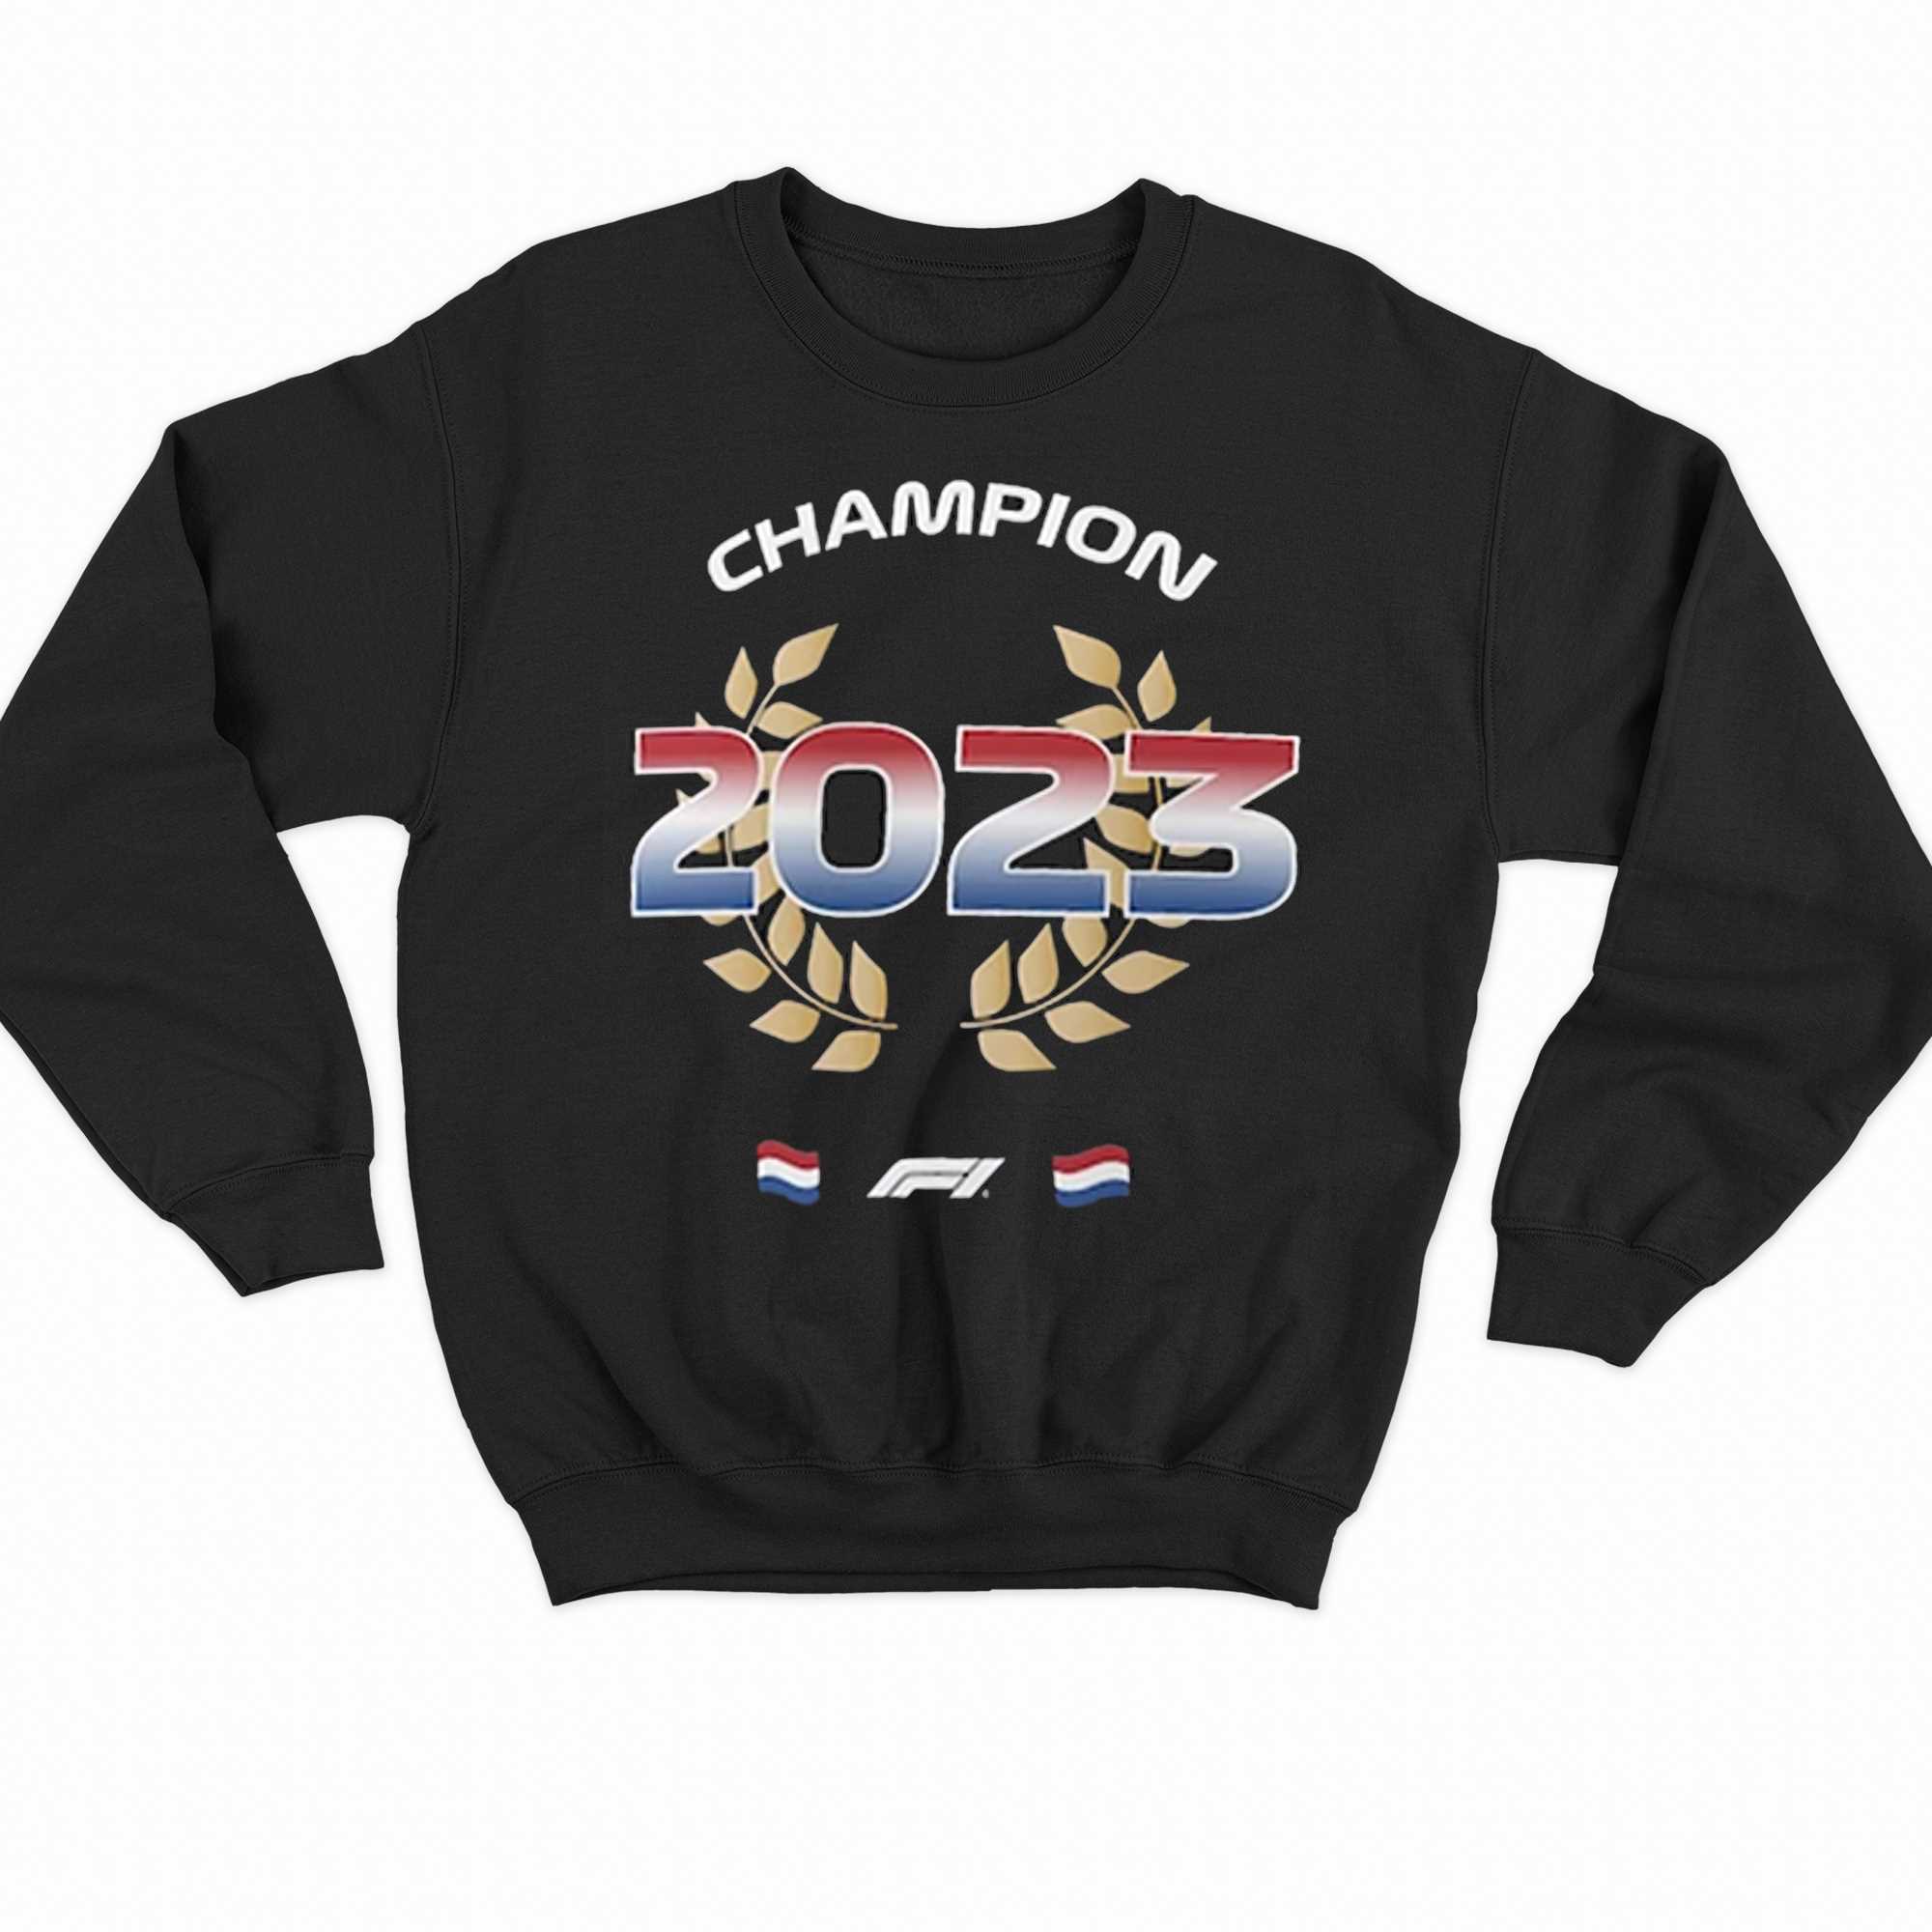 Max Verstappen 3 Times World Champion T-shirt - Shibtee Clothing